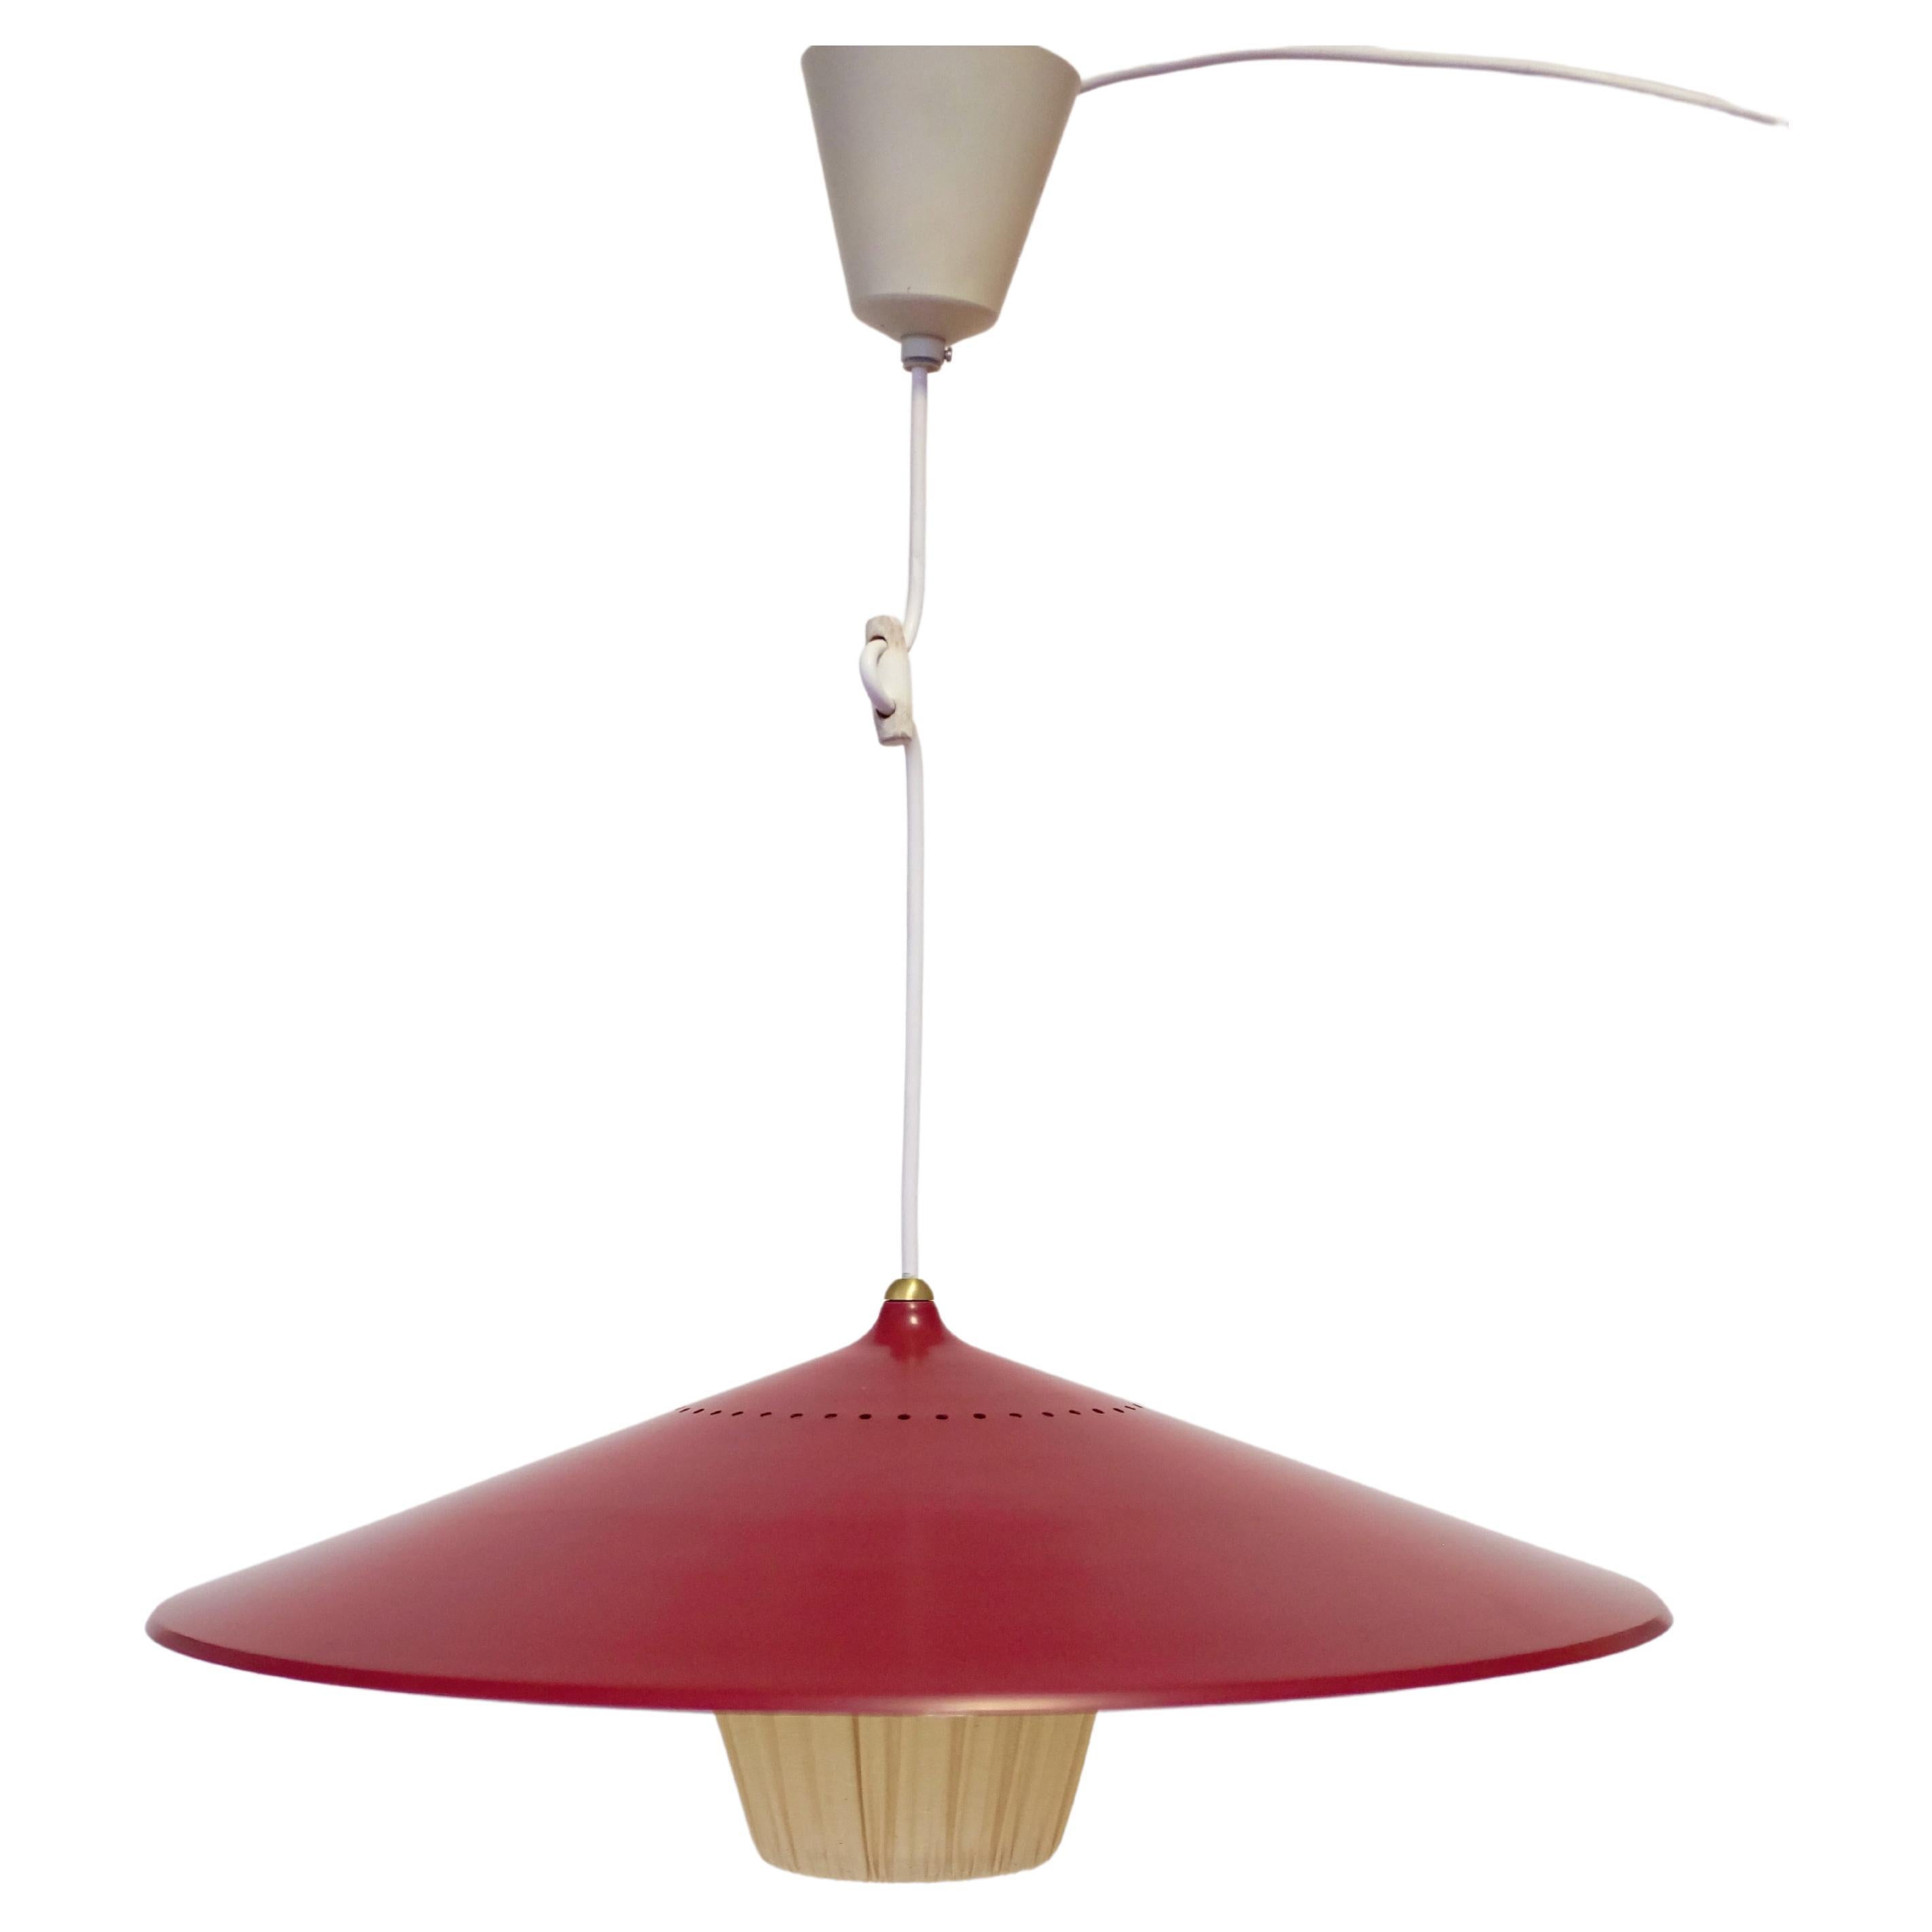 Vintage 1950s Swedish Ceiling Lamp For Sale